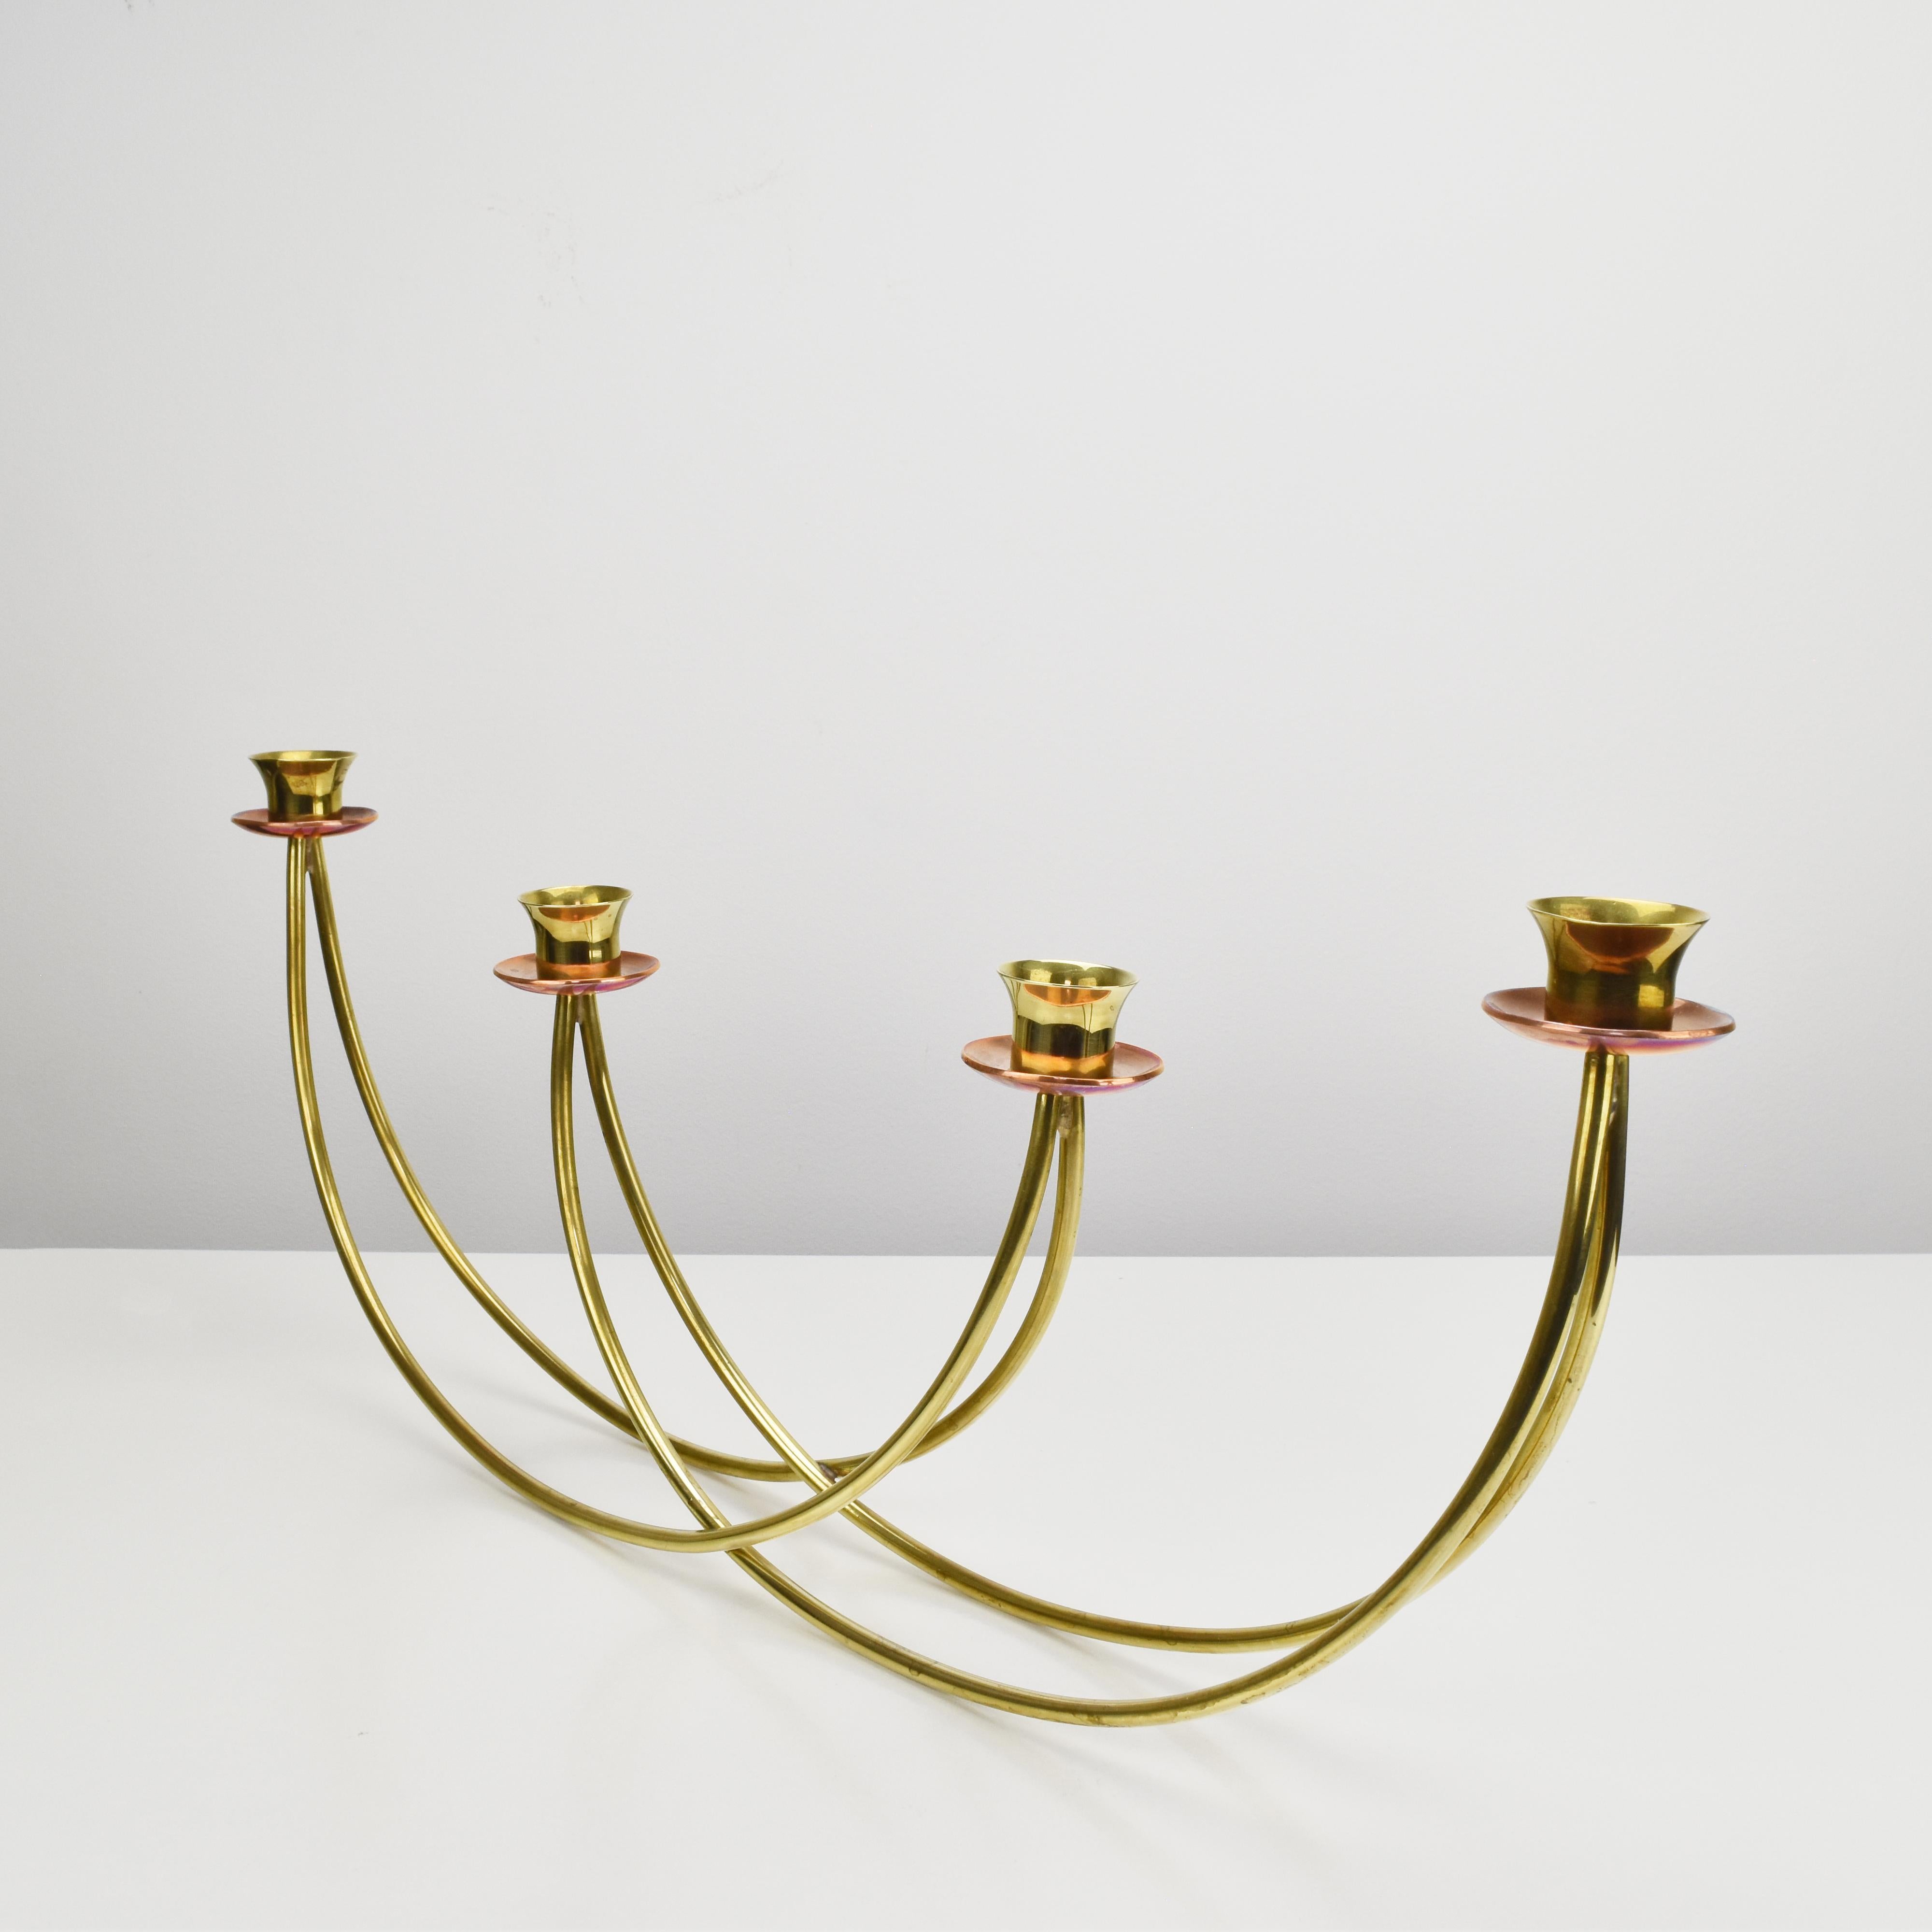 Sculptural Brass & Copper Candleholder by Harald Buchrucker Bauhaus 1940s In Good Condition For Sale In Bad Säckingen, DE